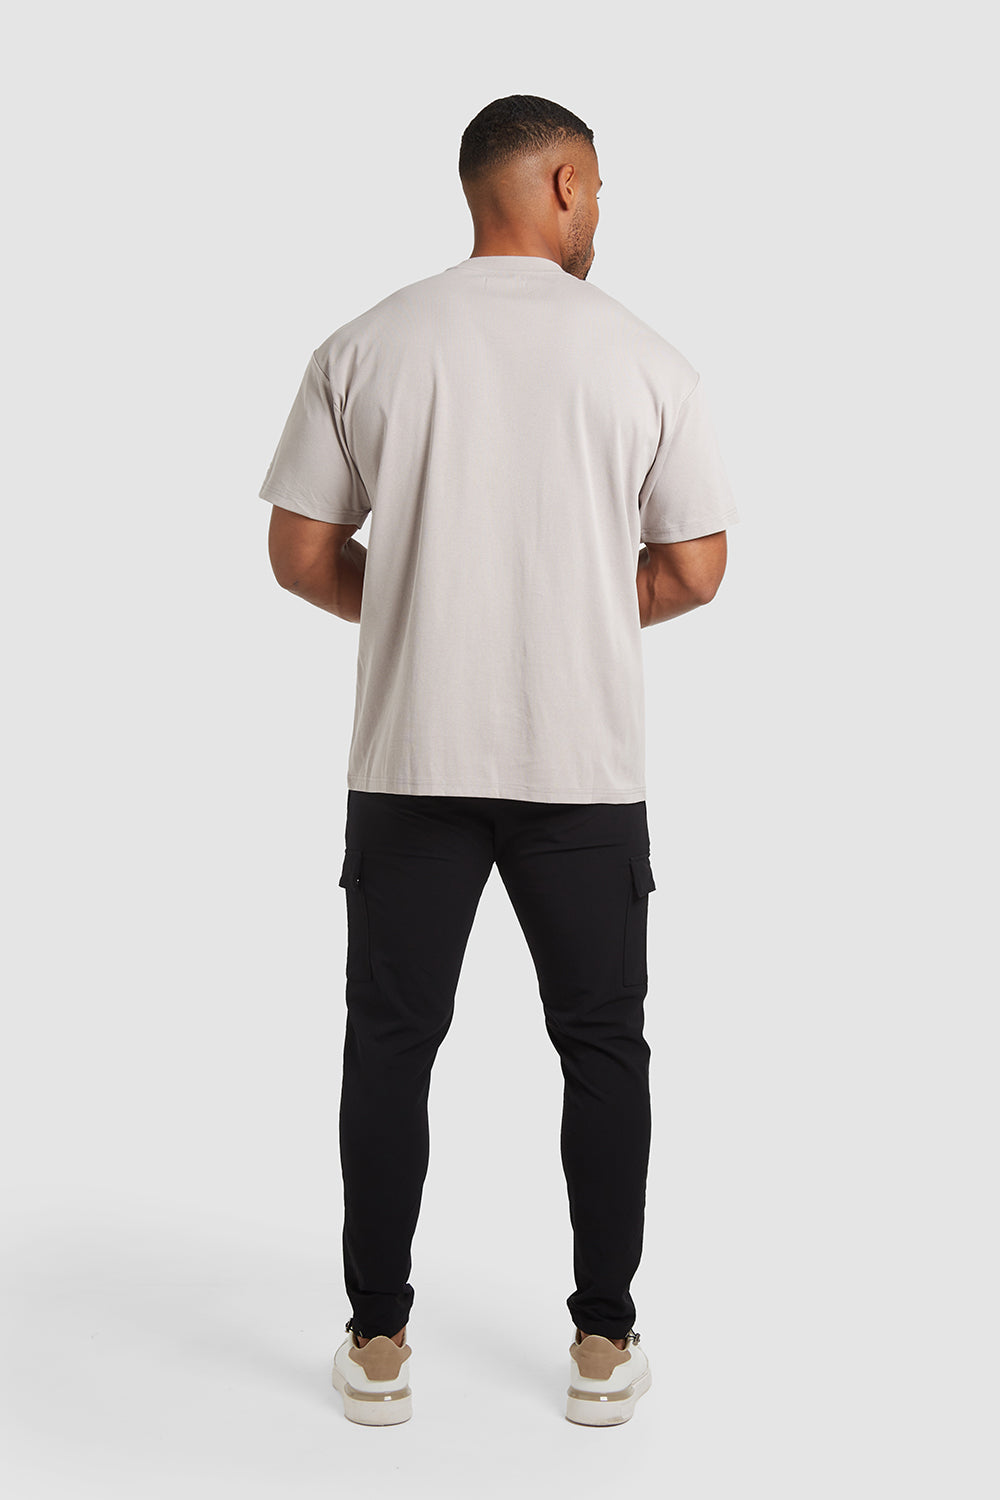 Maternity Jogger Set - Cotton T-shirt with Comfy Pants